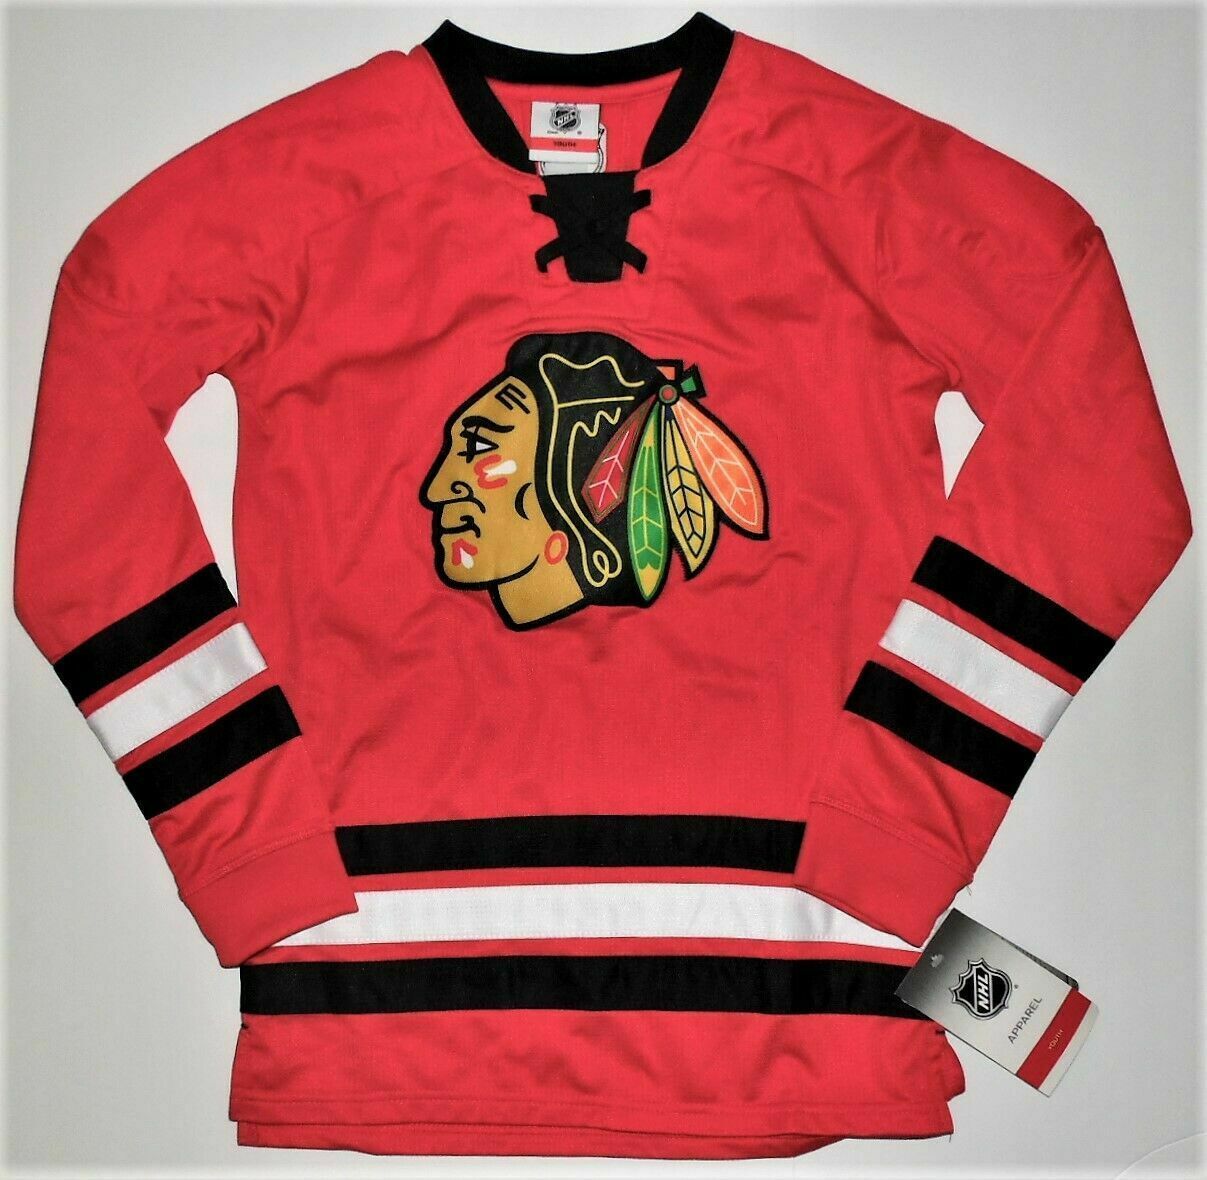 Primary image for NHL Apparel Boys Chicago Blackhawks Jersey Size Medium 10-12 NWT